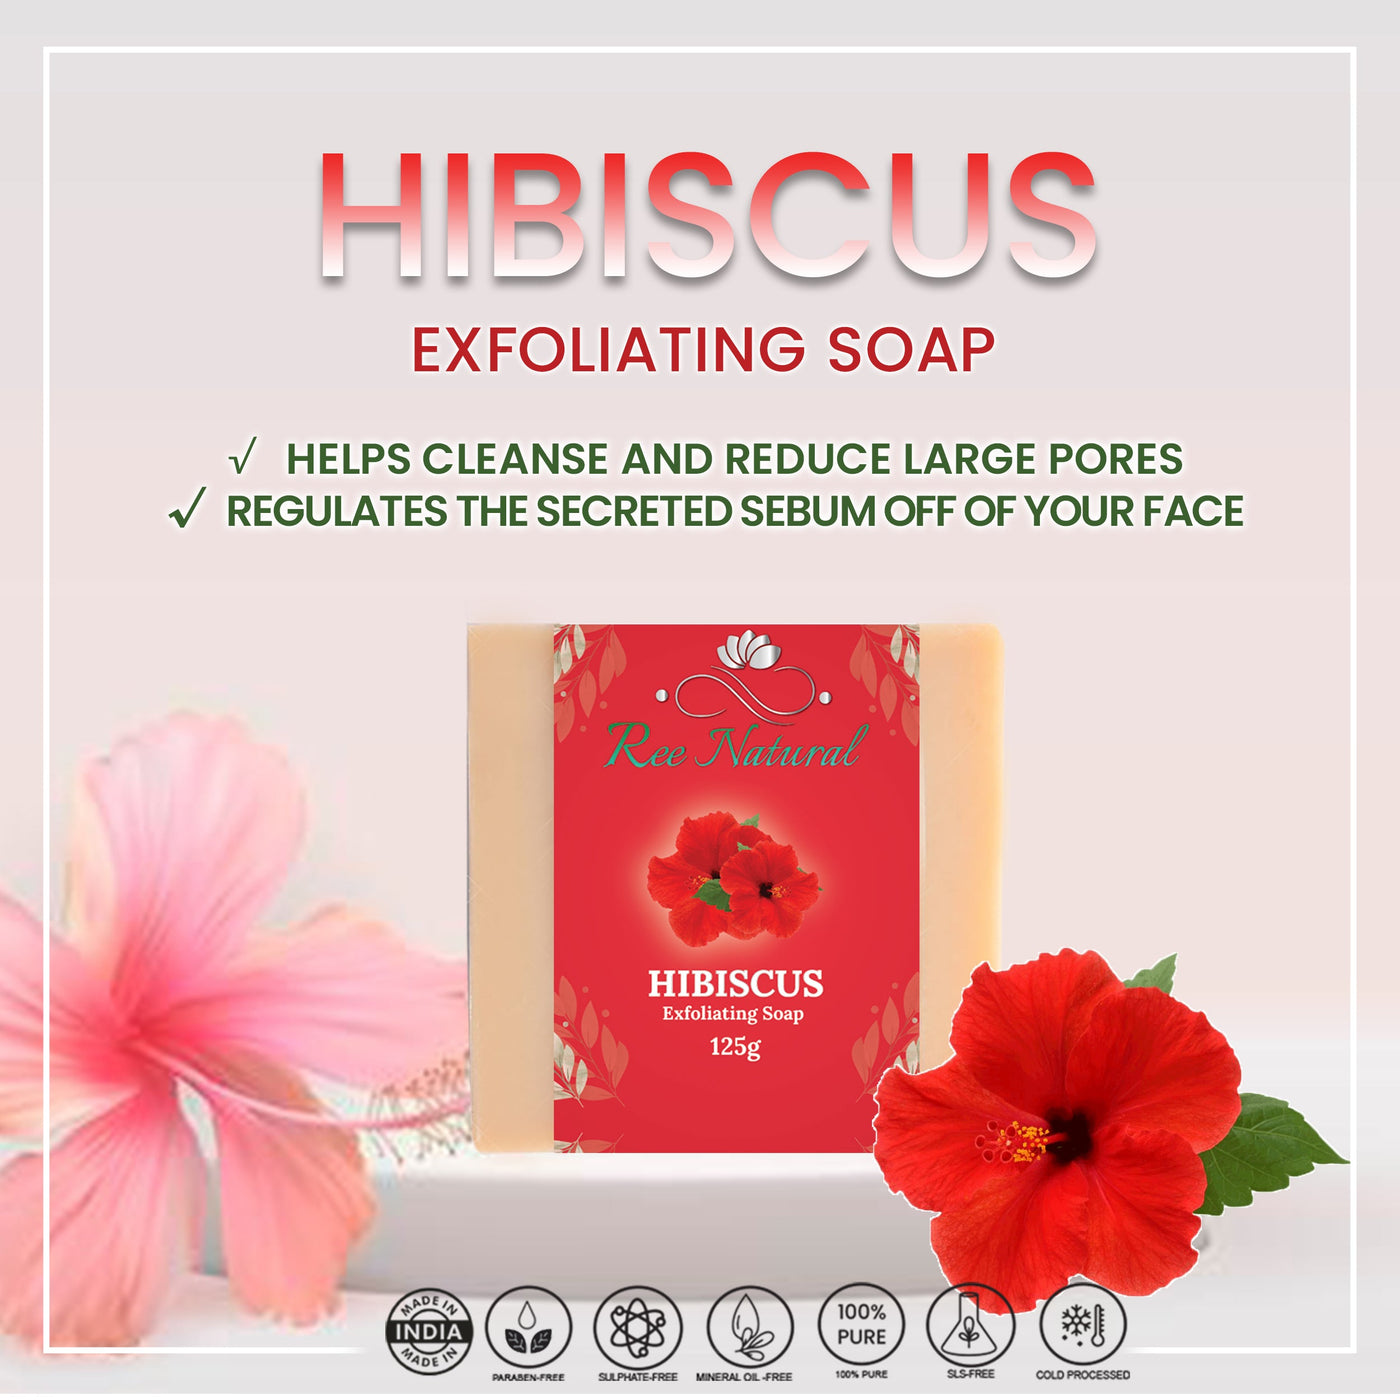 Women's Hibiscus Exfoliating Soap - Ree Natural